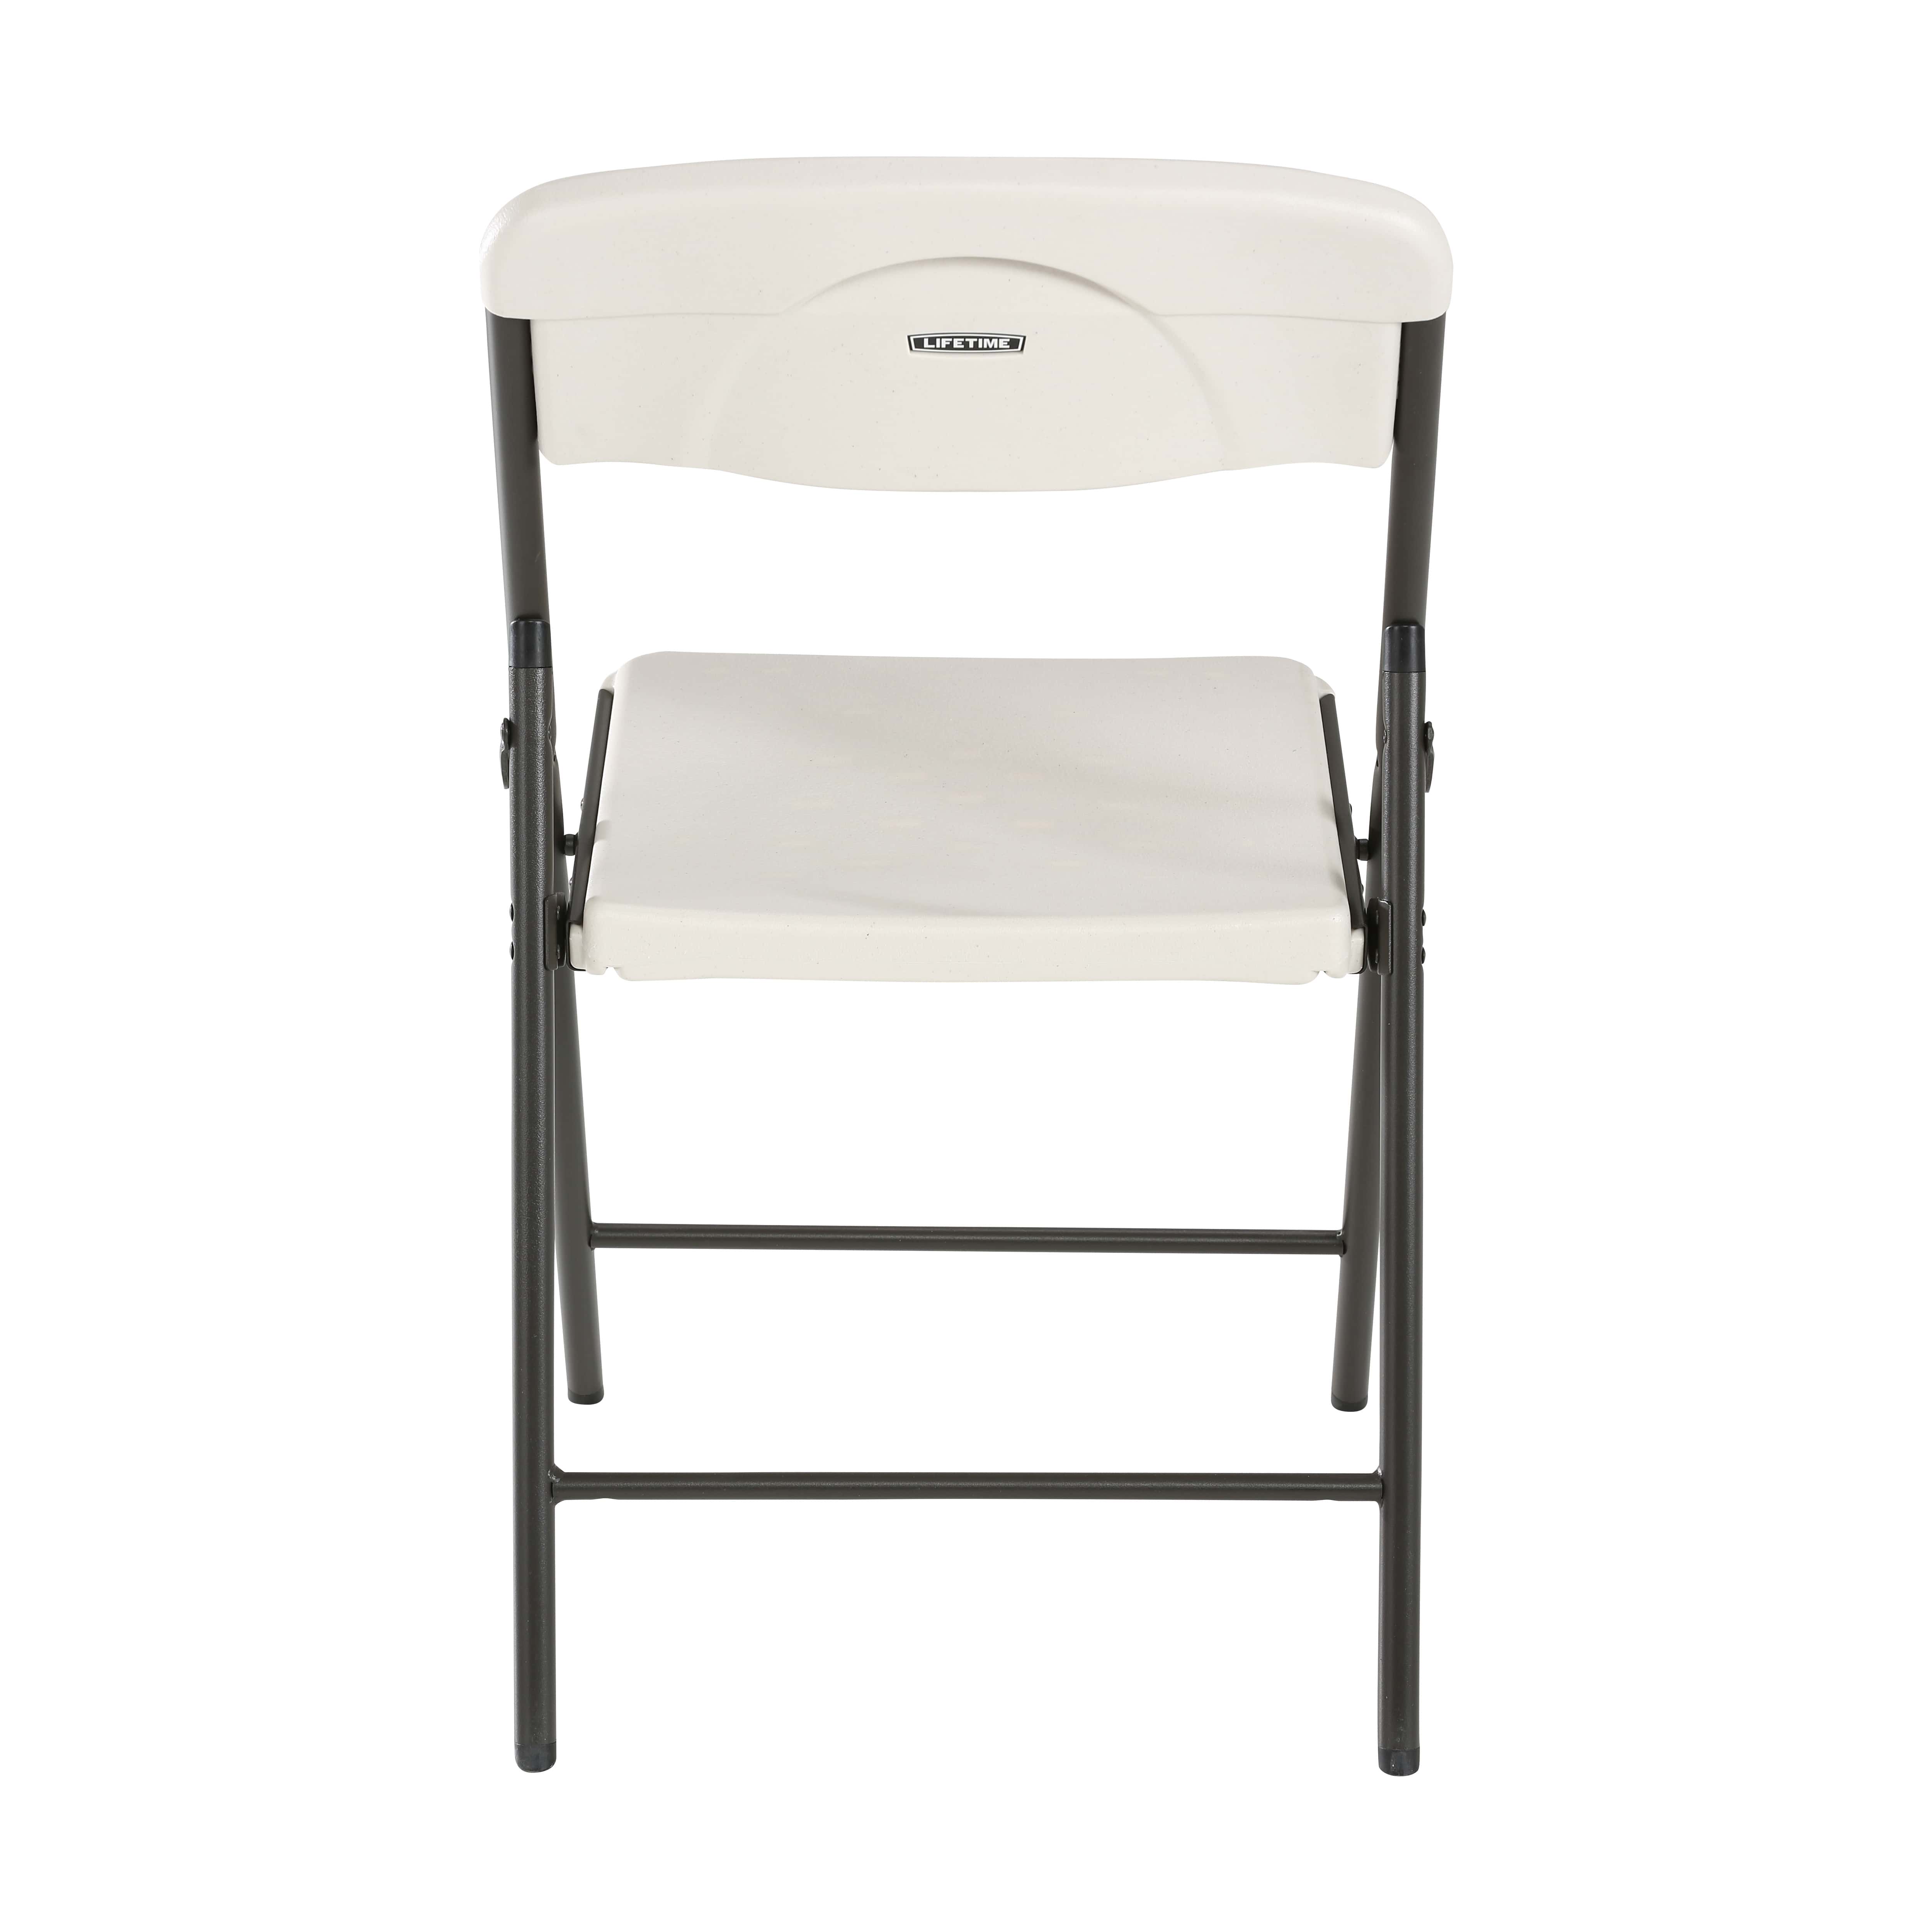 Contemporary folding chair (almond) - Lifetime